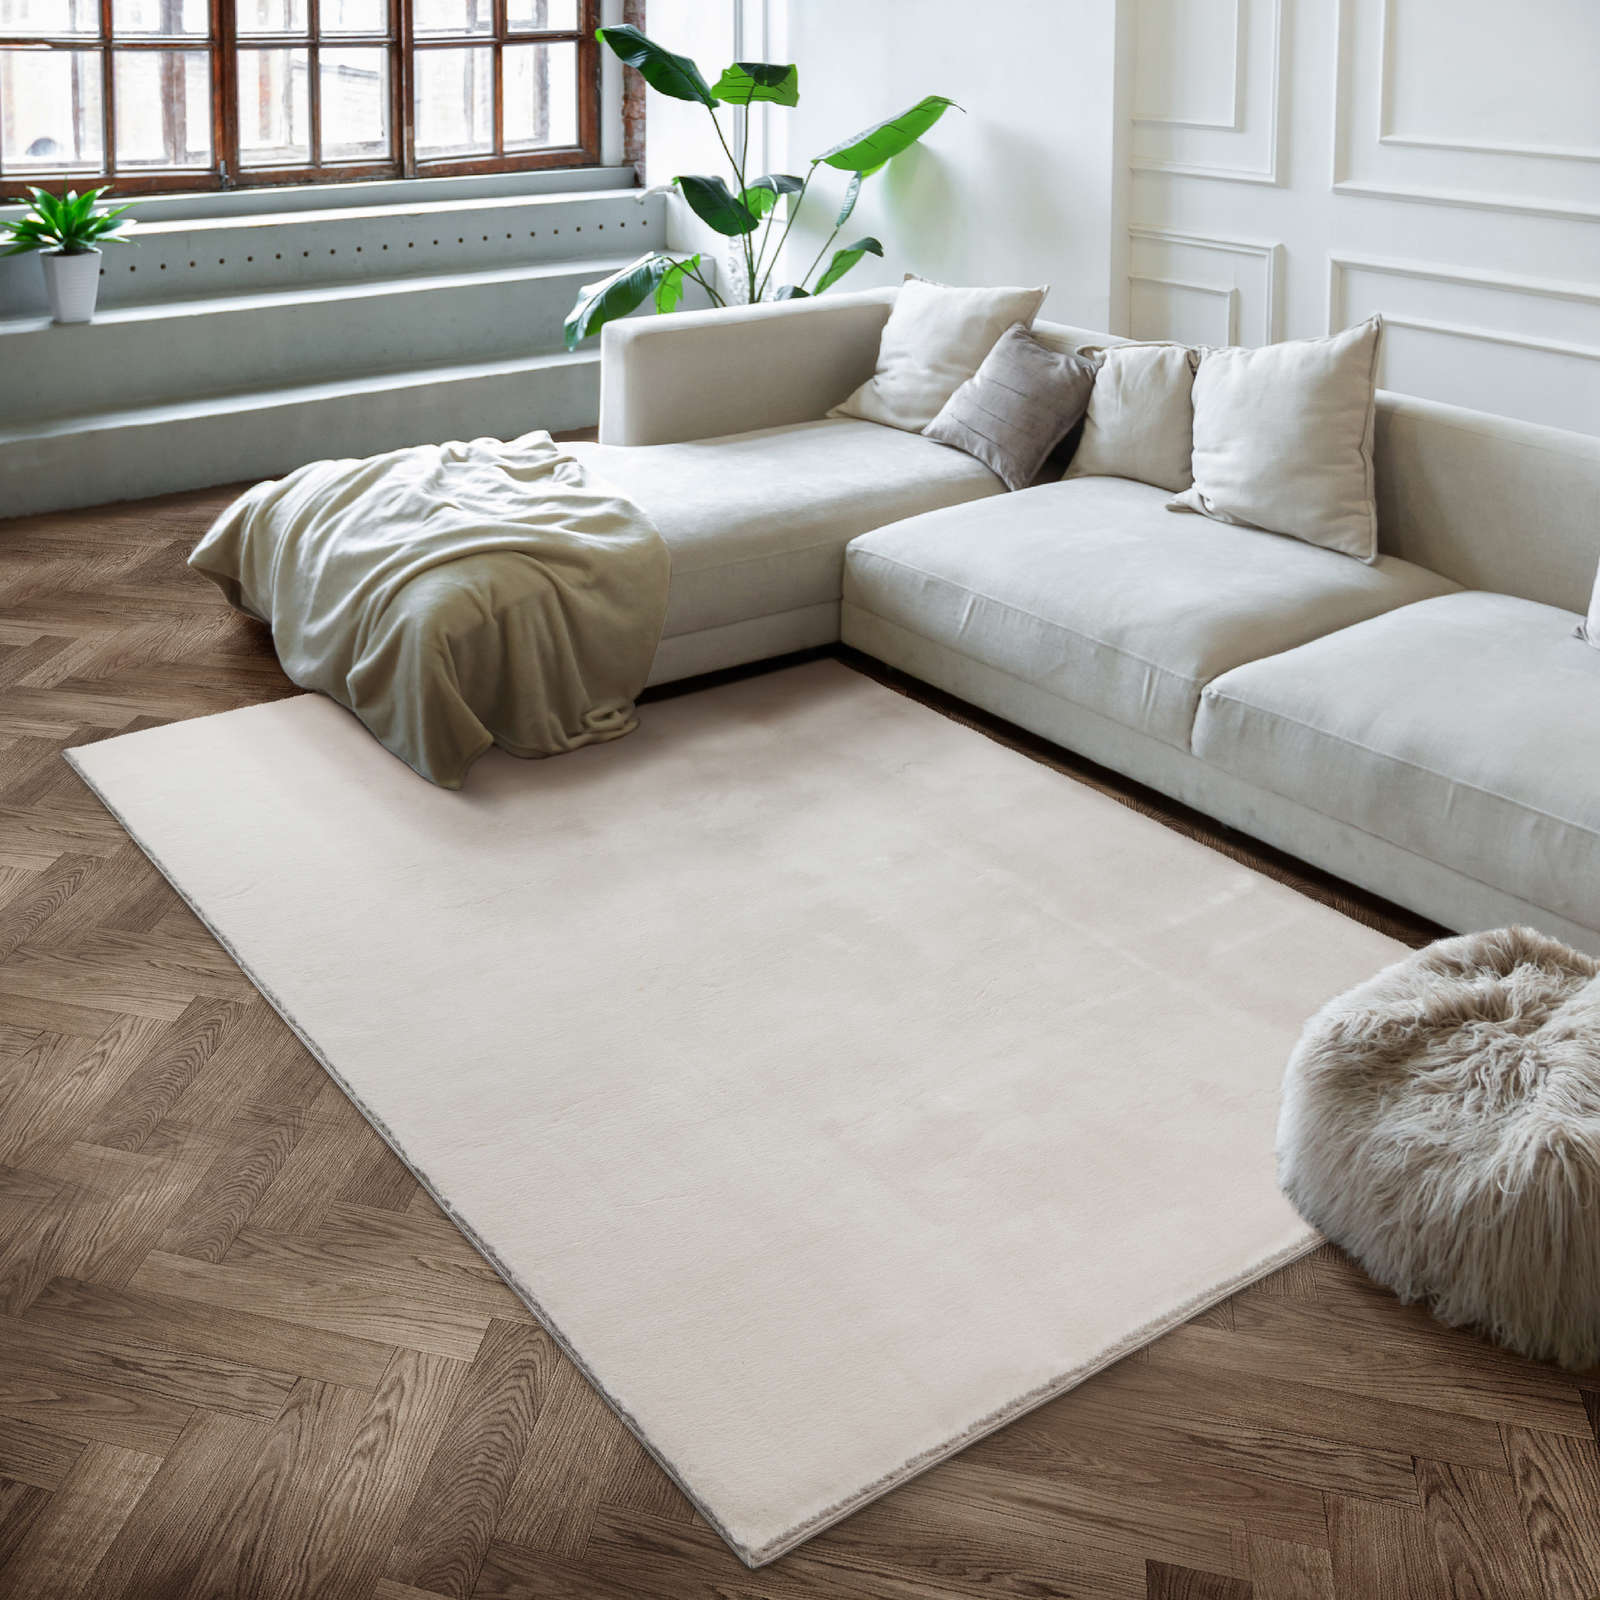             Cuddly soft high pile carpet in light beige - 230 x 160 cm
        